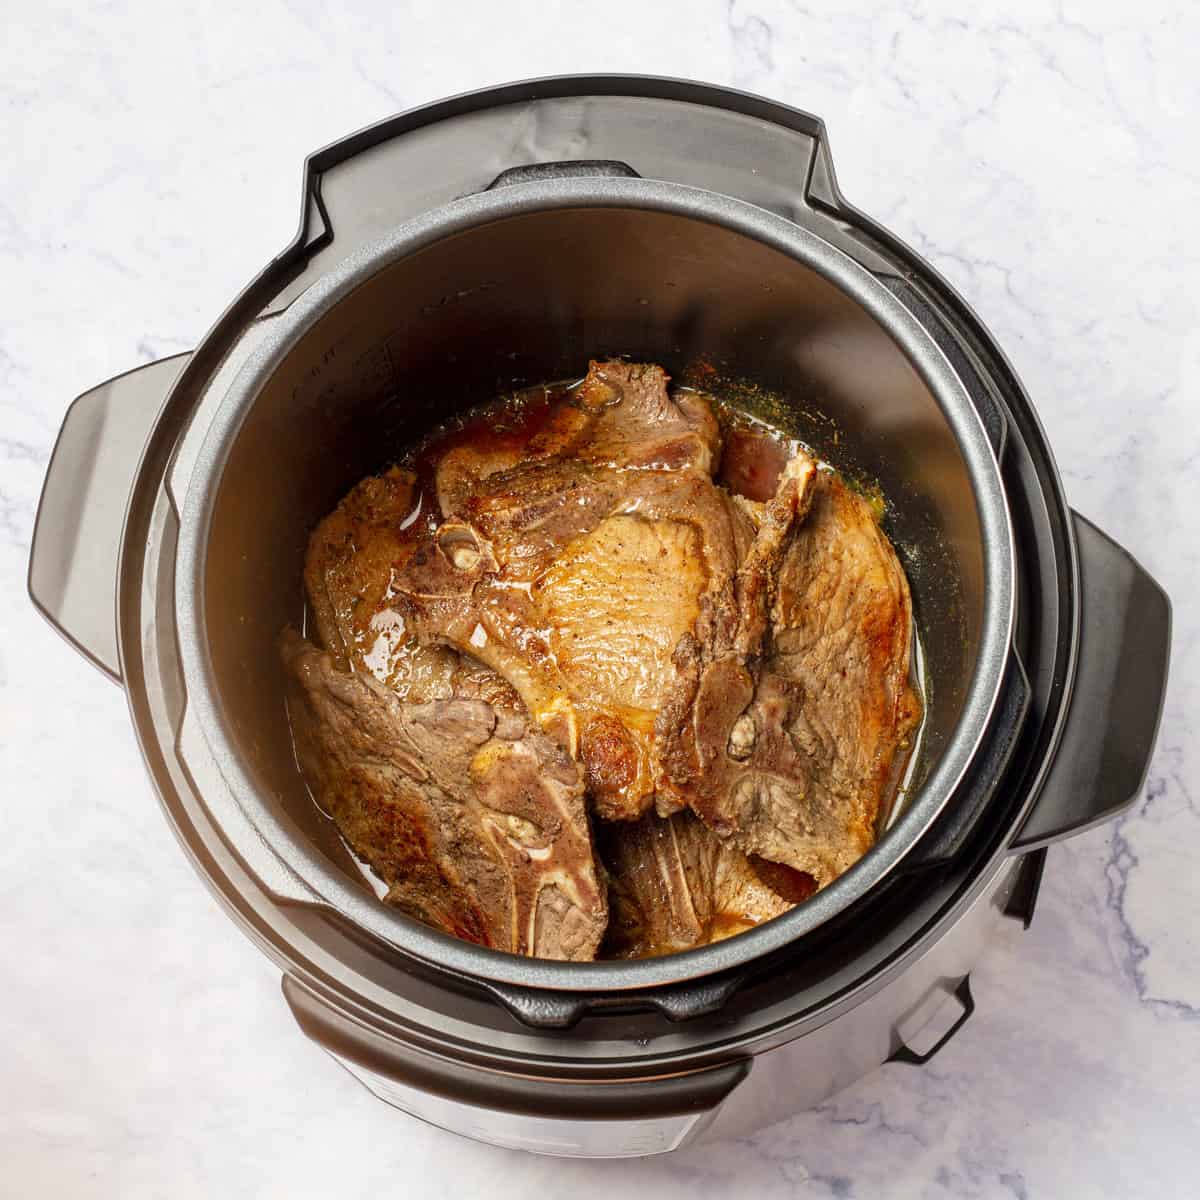 Cook pork chops in instant pot